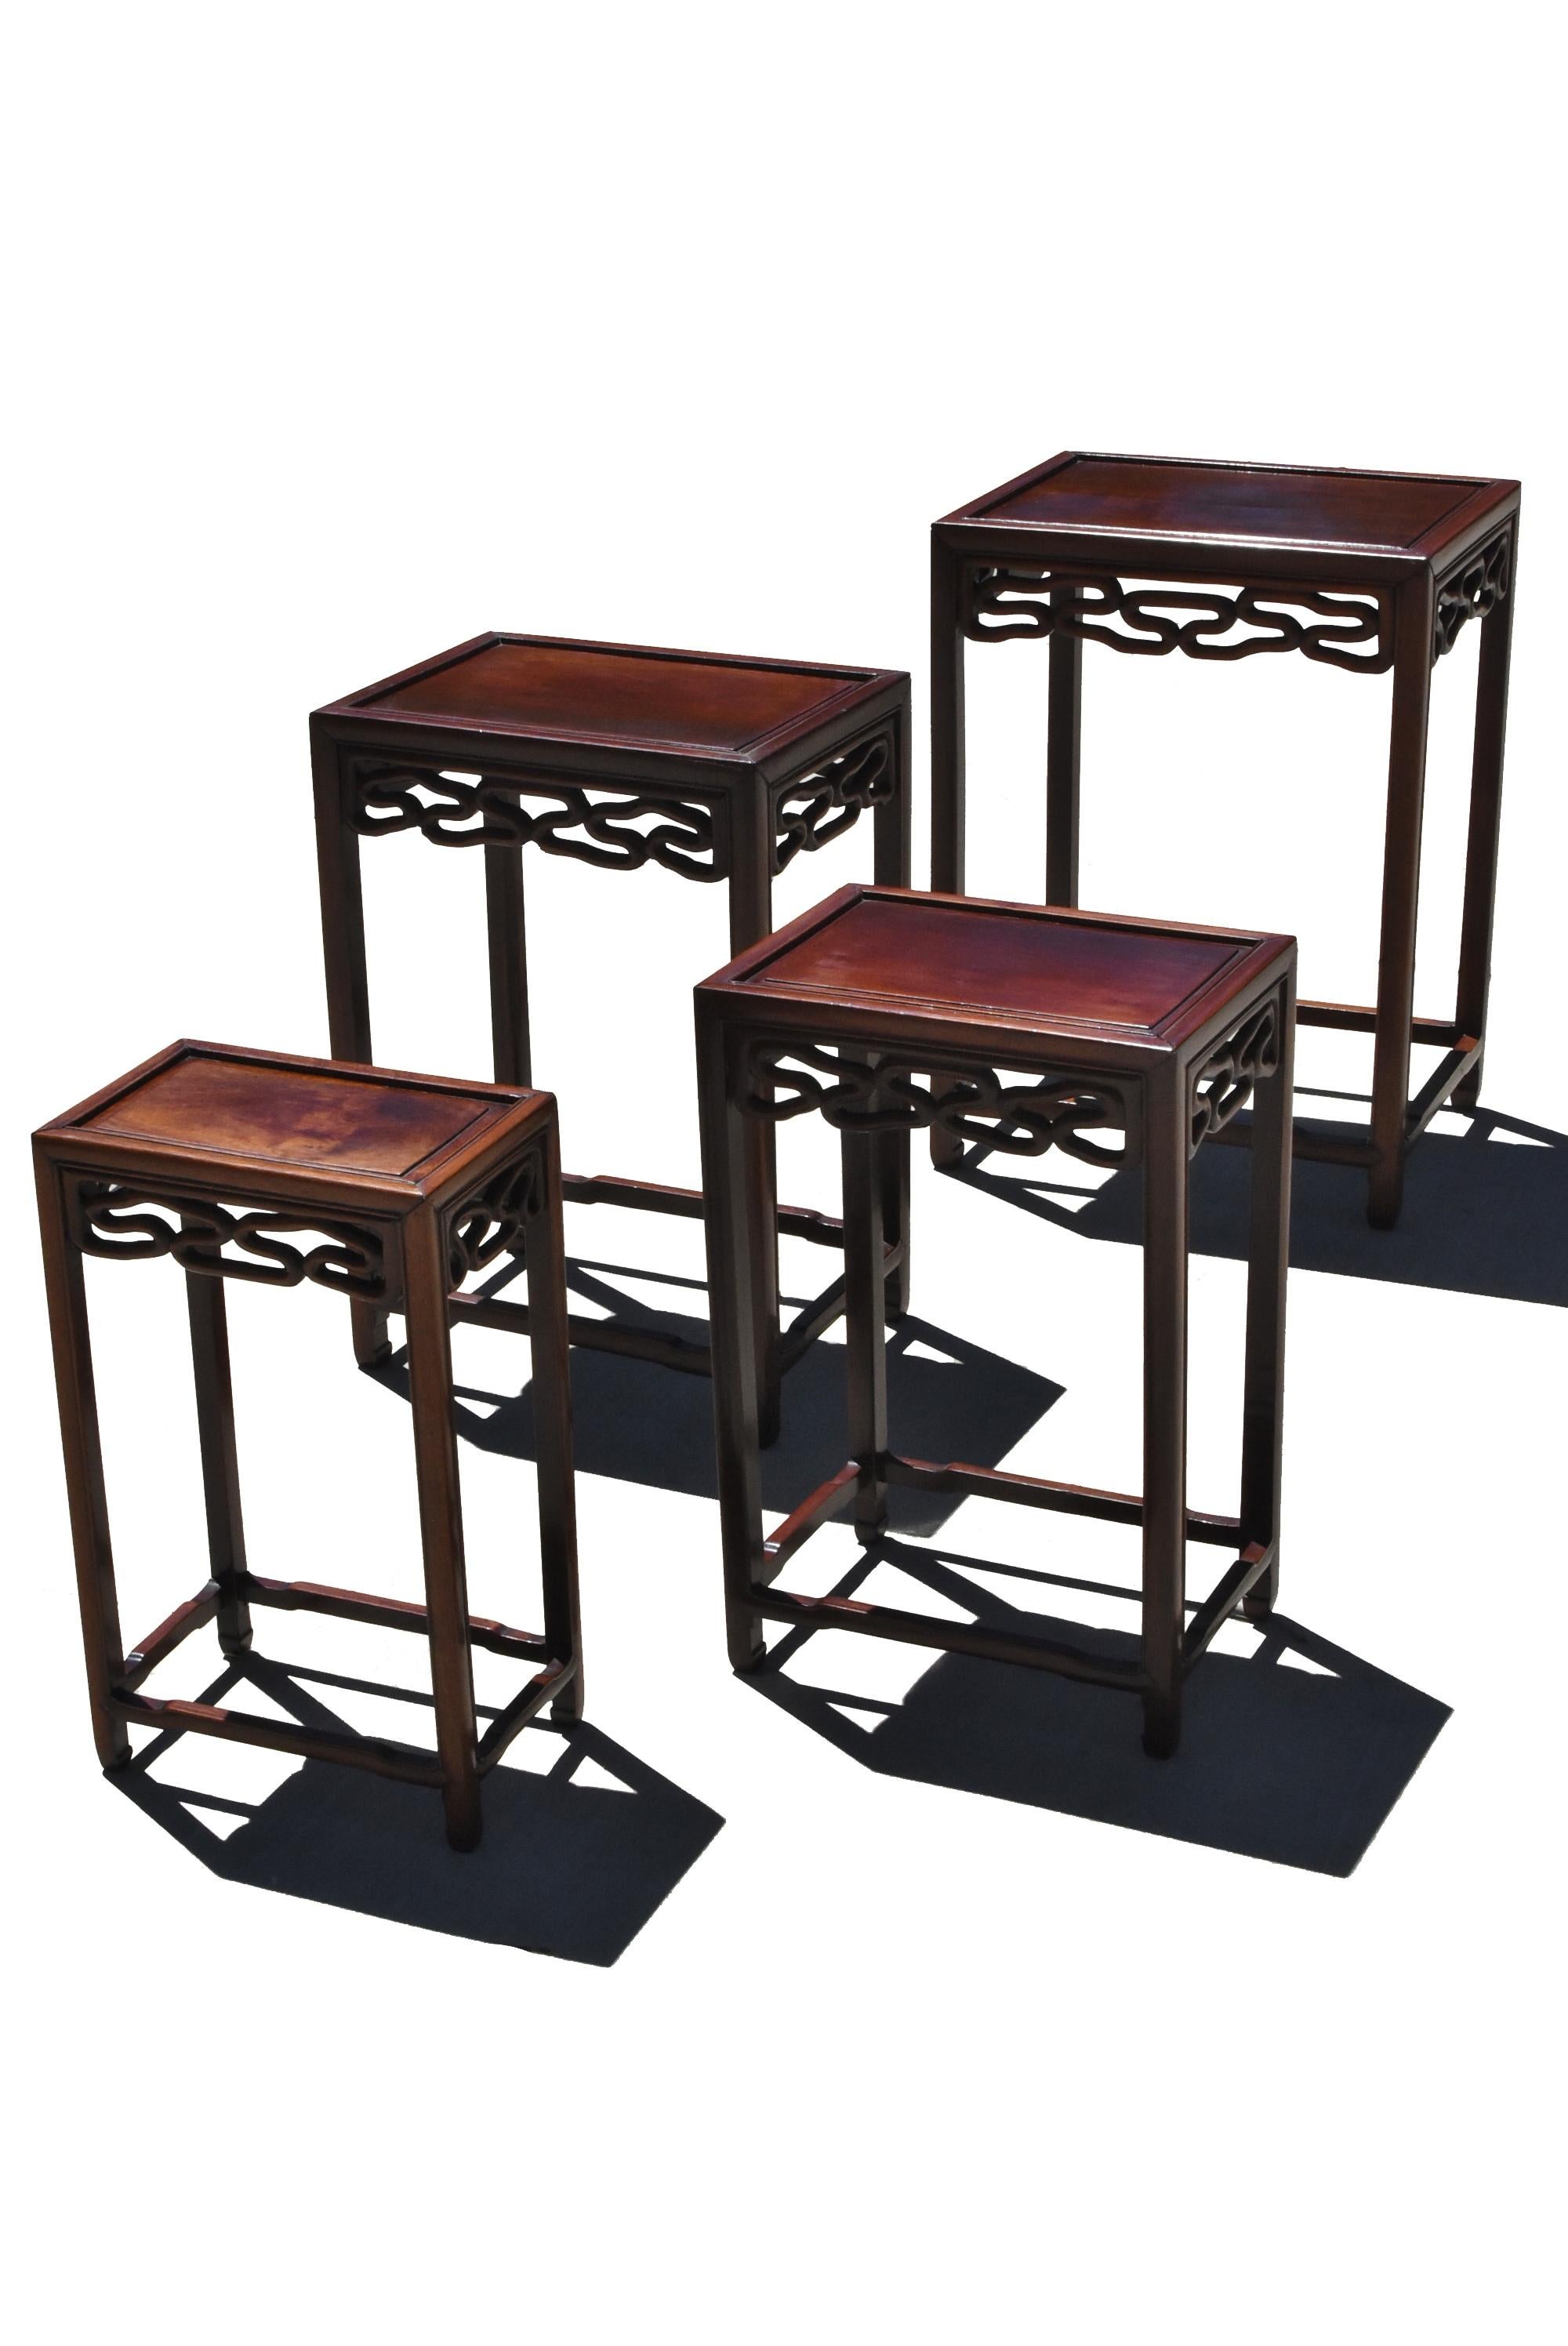 huali furniture custom made buyer